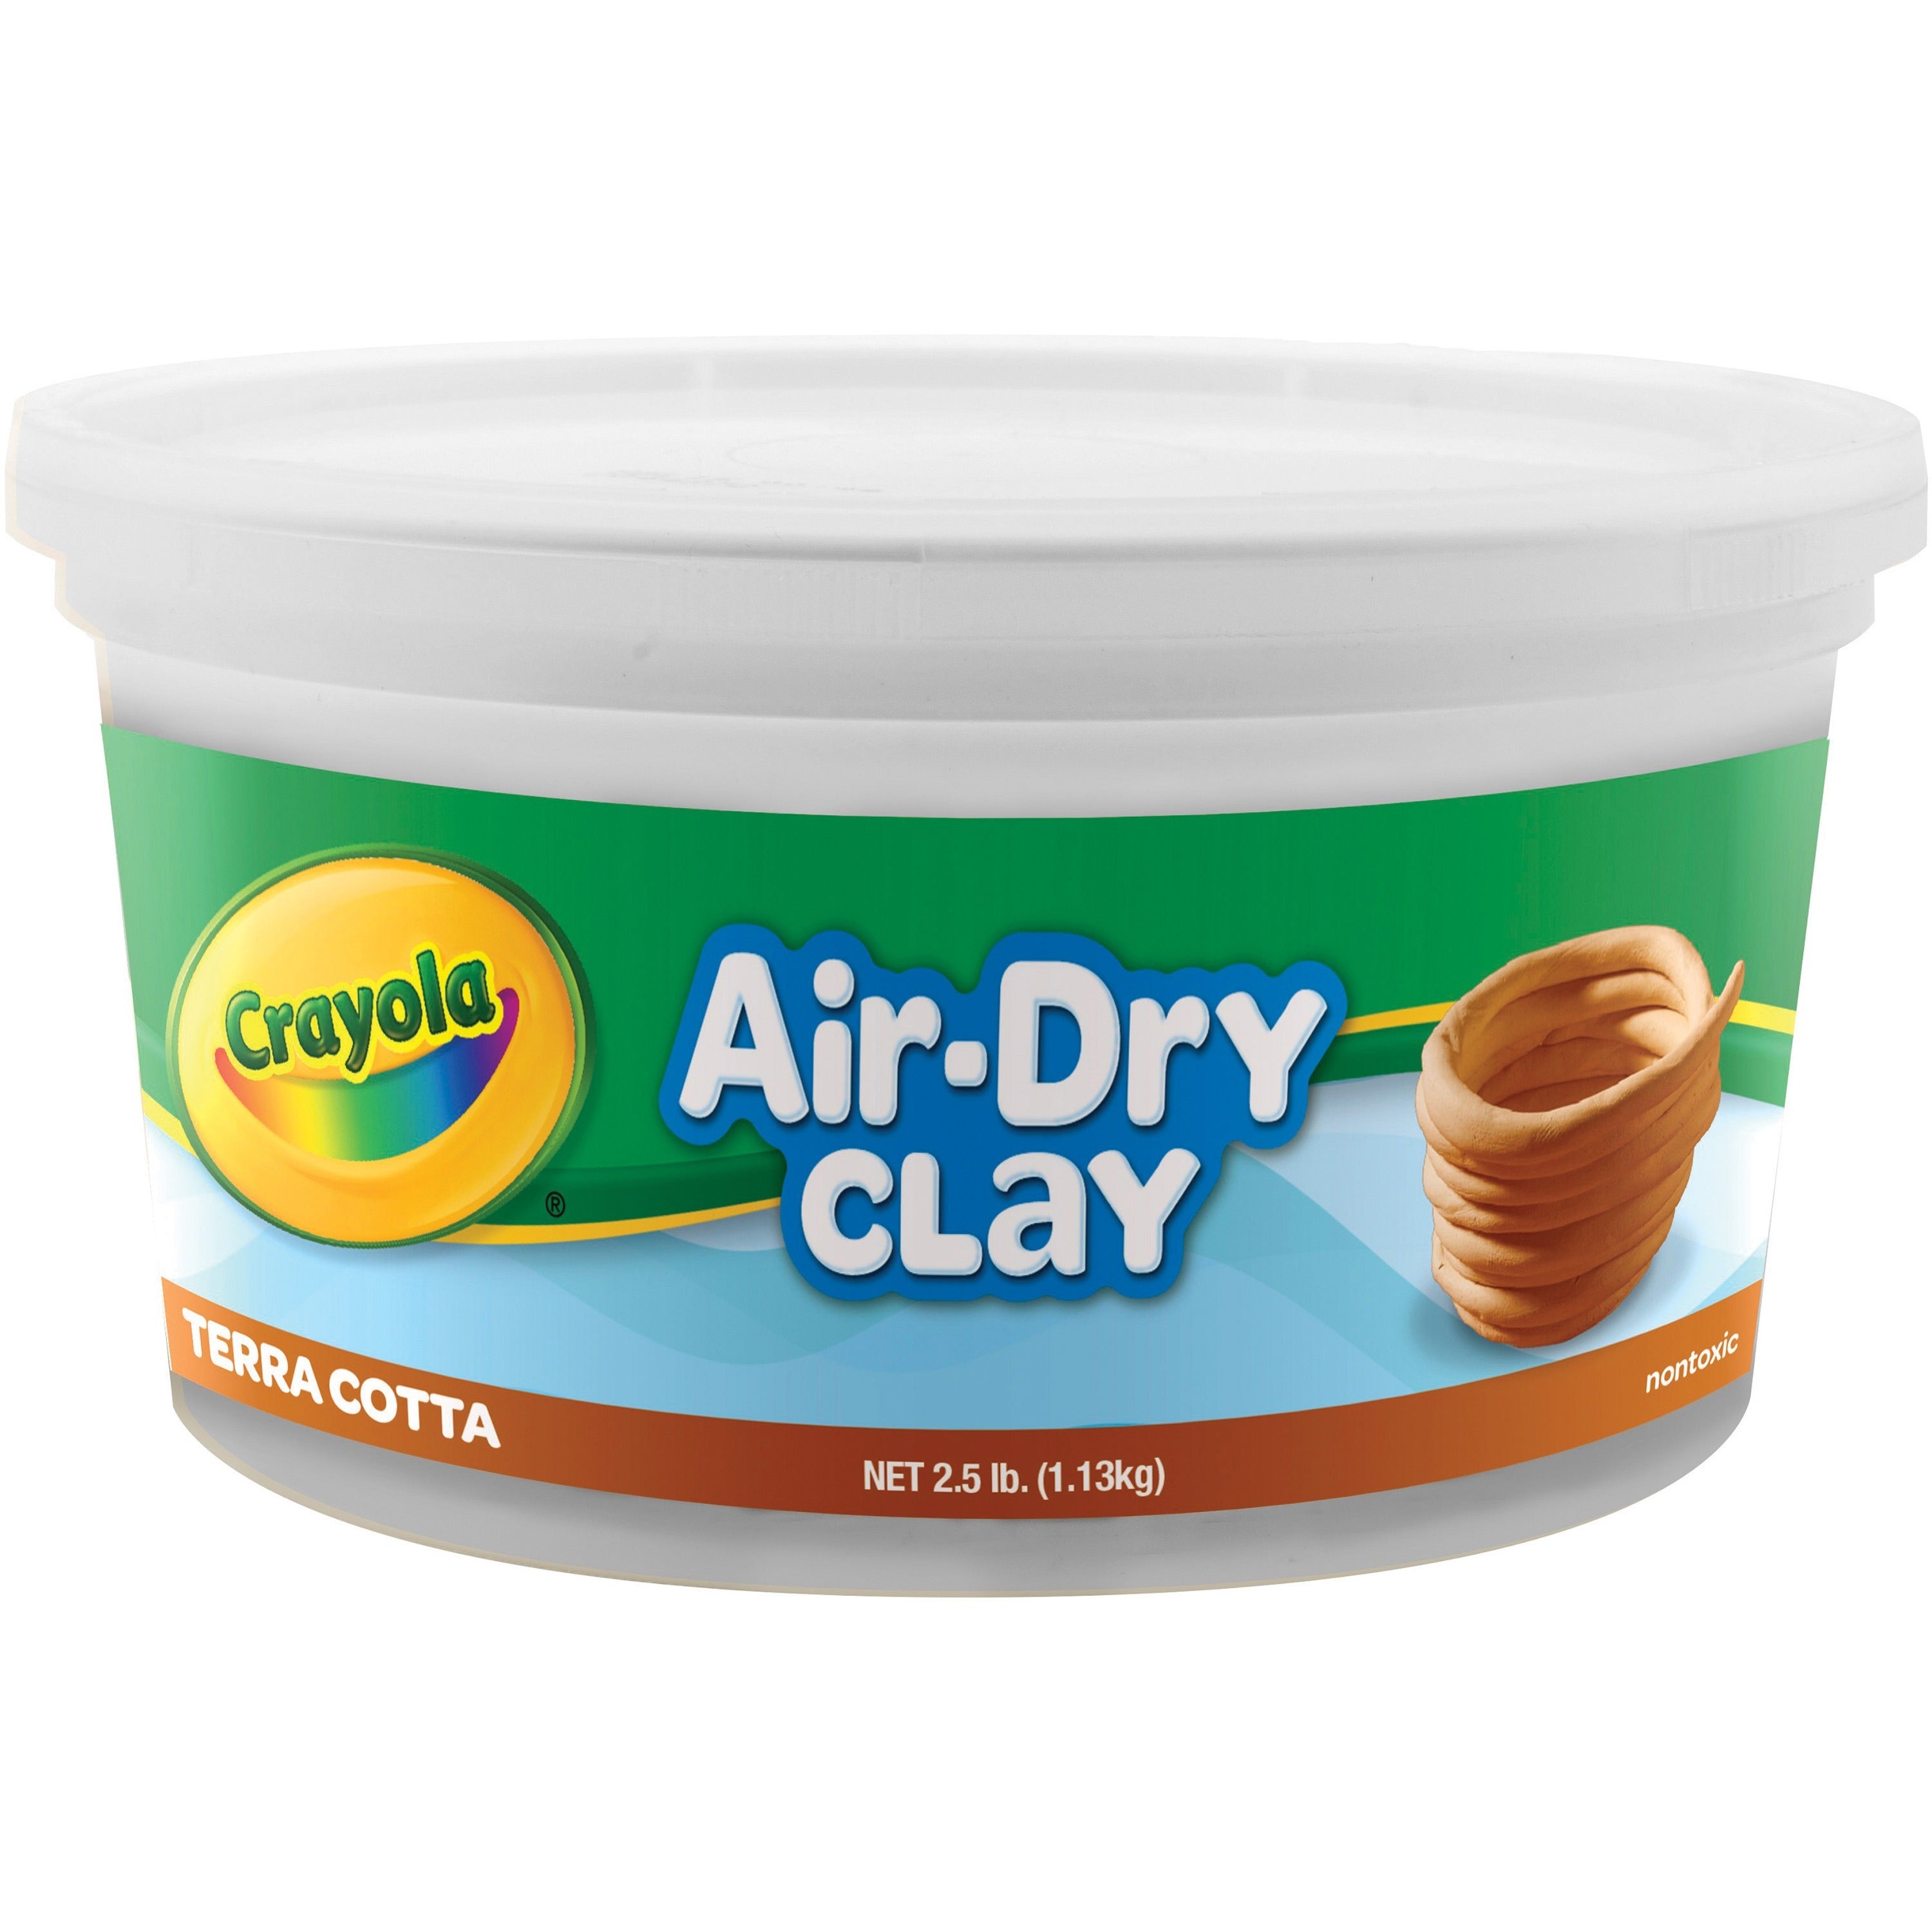 Crayola Air-Dry Clay - Art, Craft - 1 Each - Terra Cotta - 